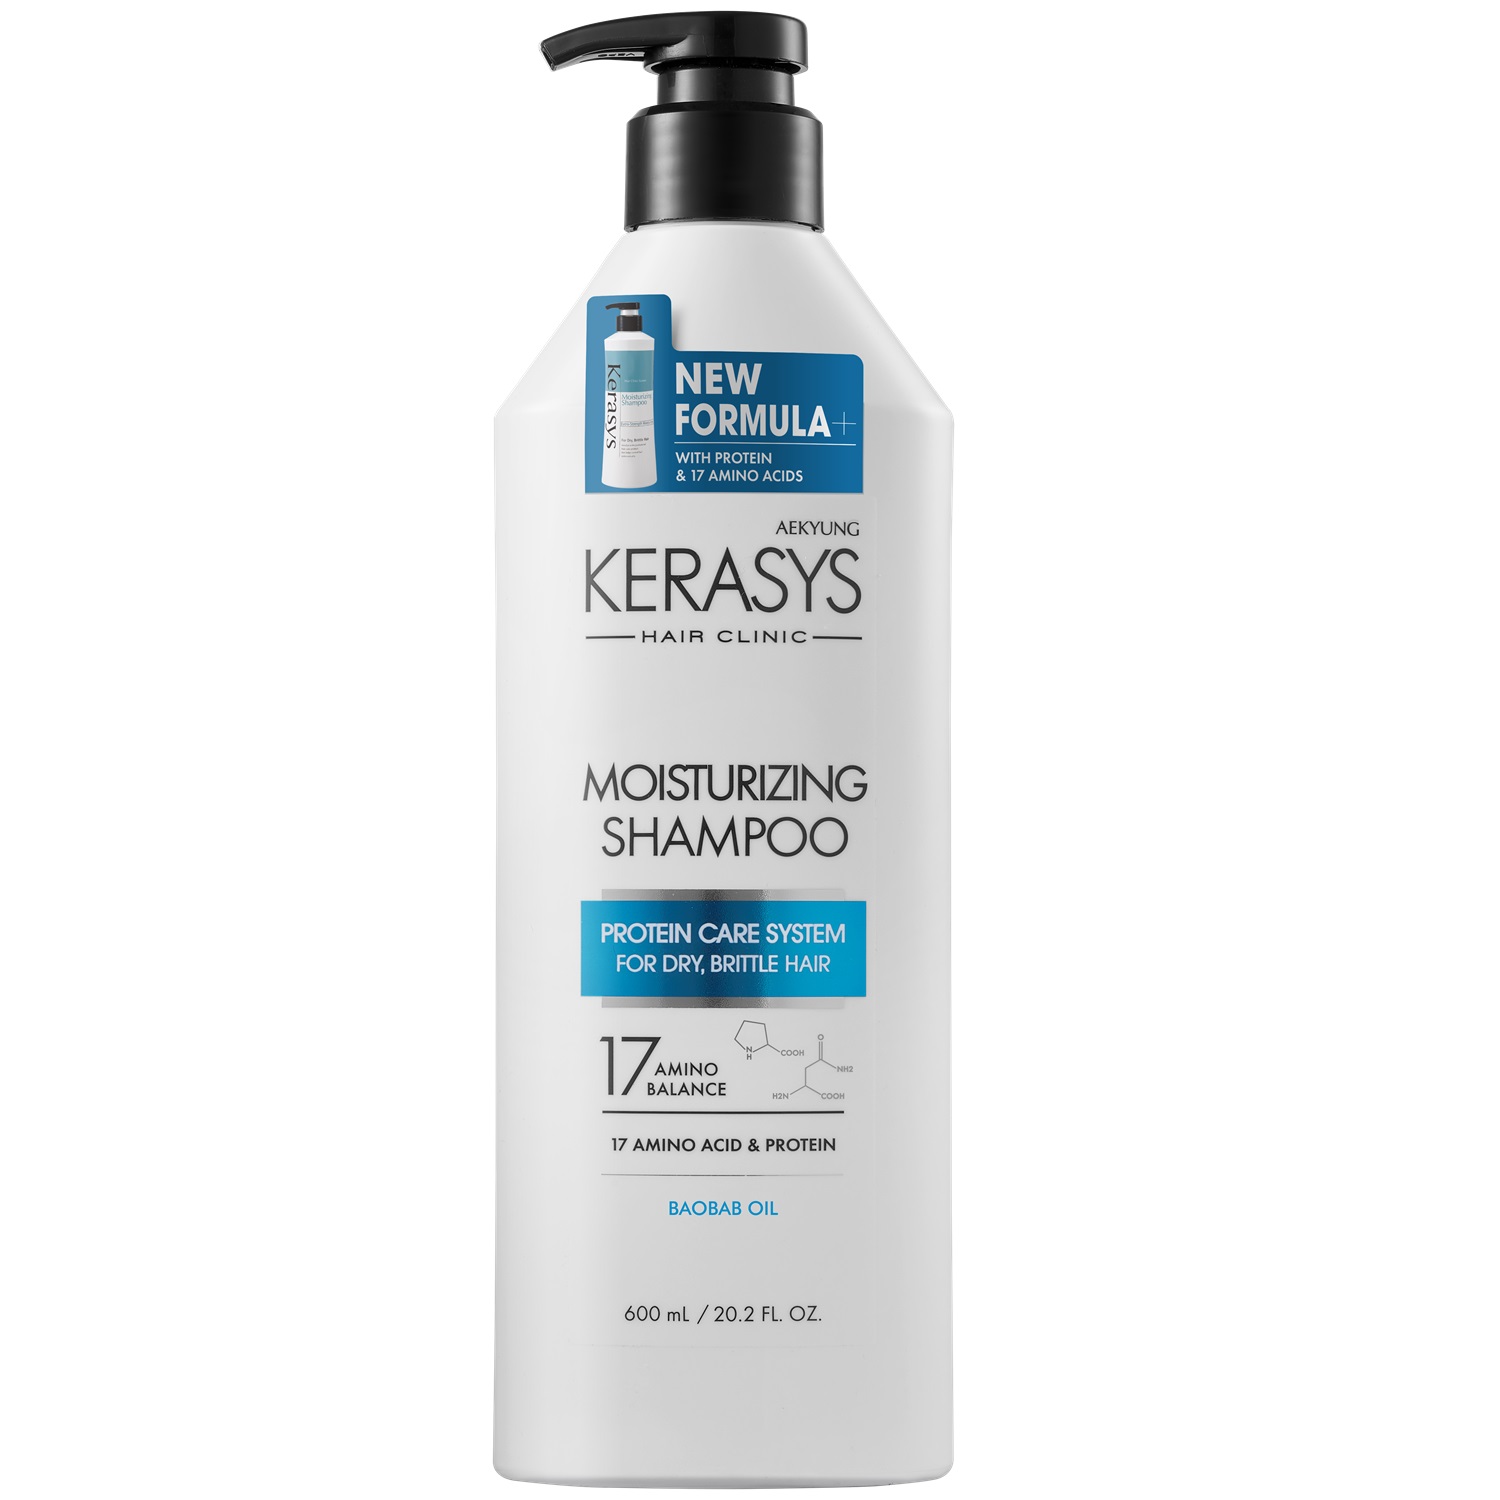 Kerasys Hair Clinic Moisturizing Шампунь увлажняющий для волос 600 мл (Kerasys, ) цена и фото